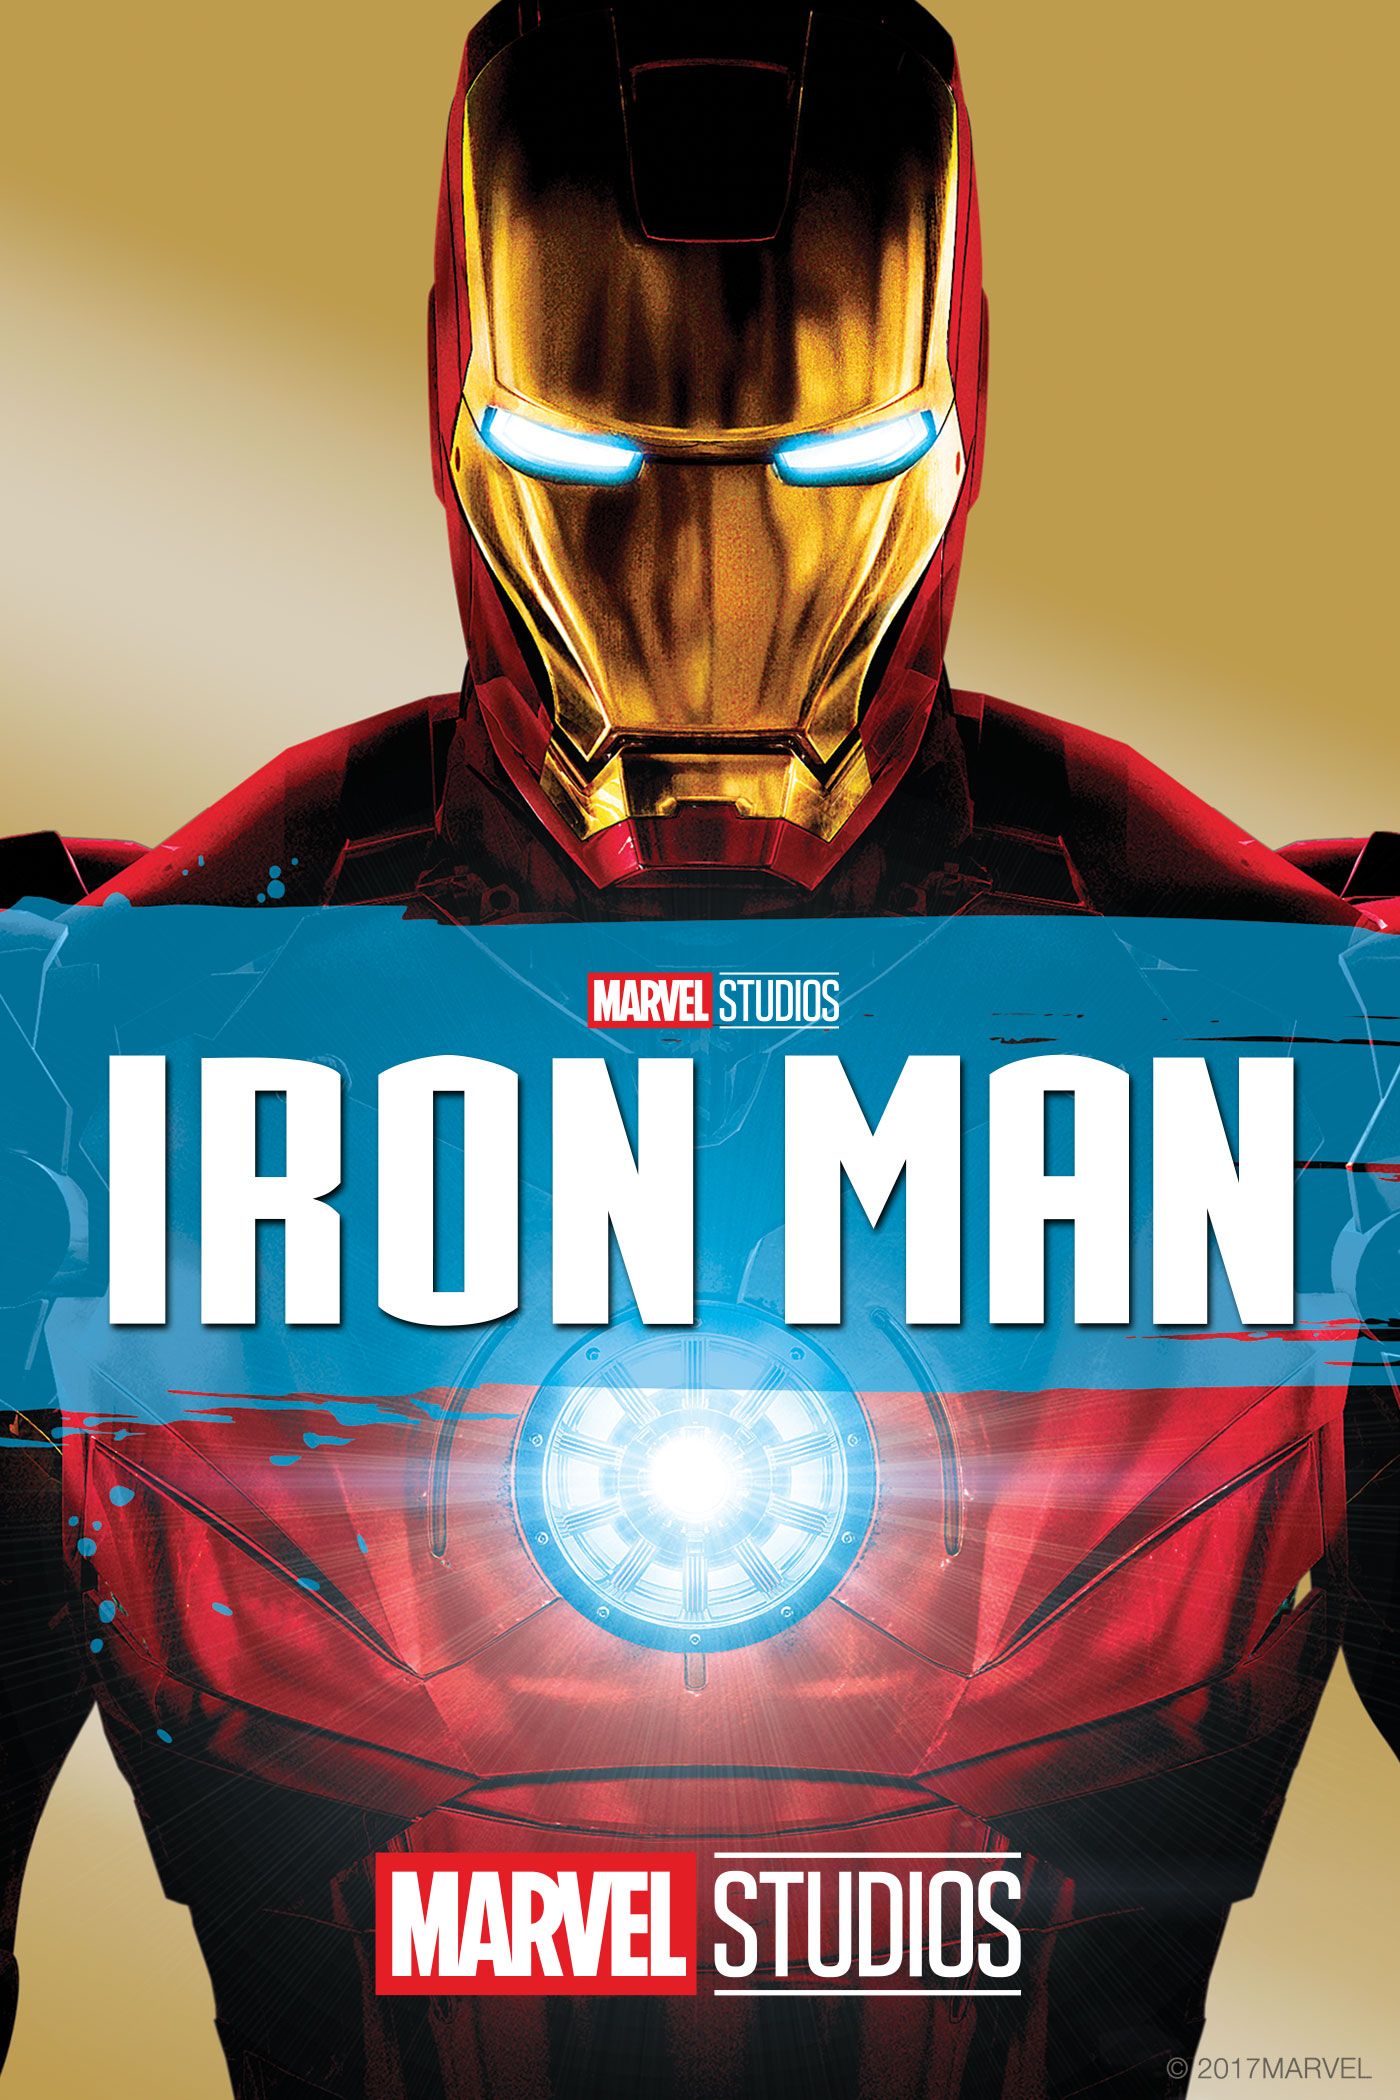 Marvel Studios' Iron Man   Full Movie   Movies Anywhere